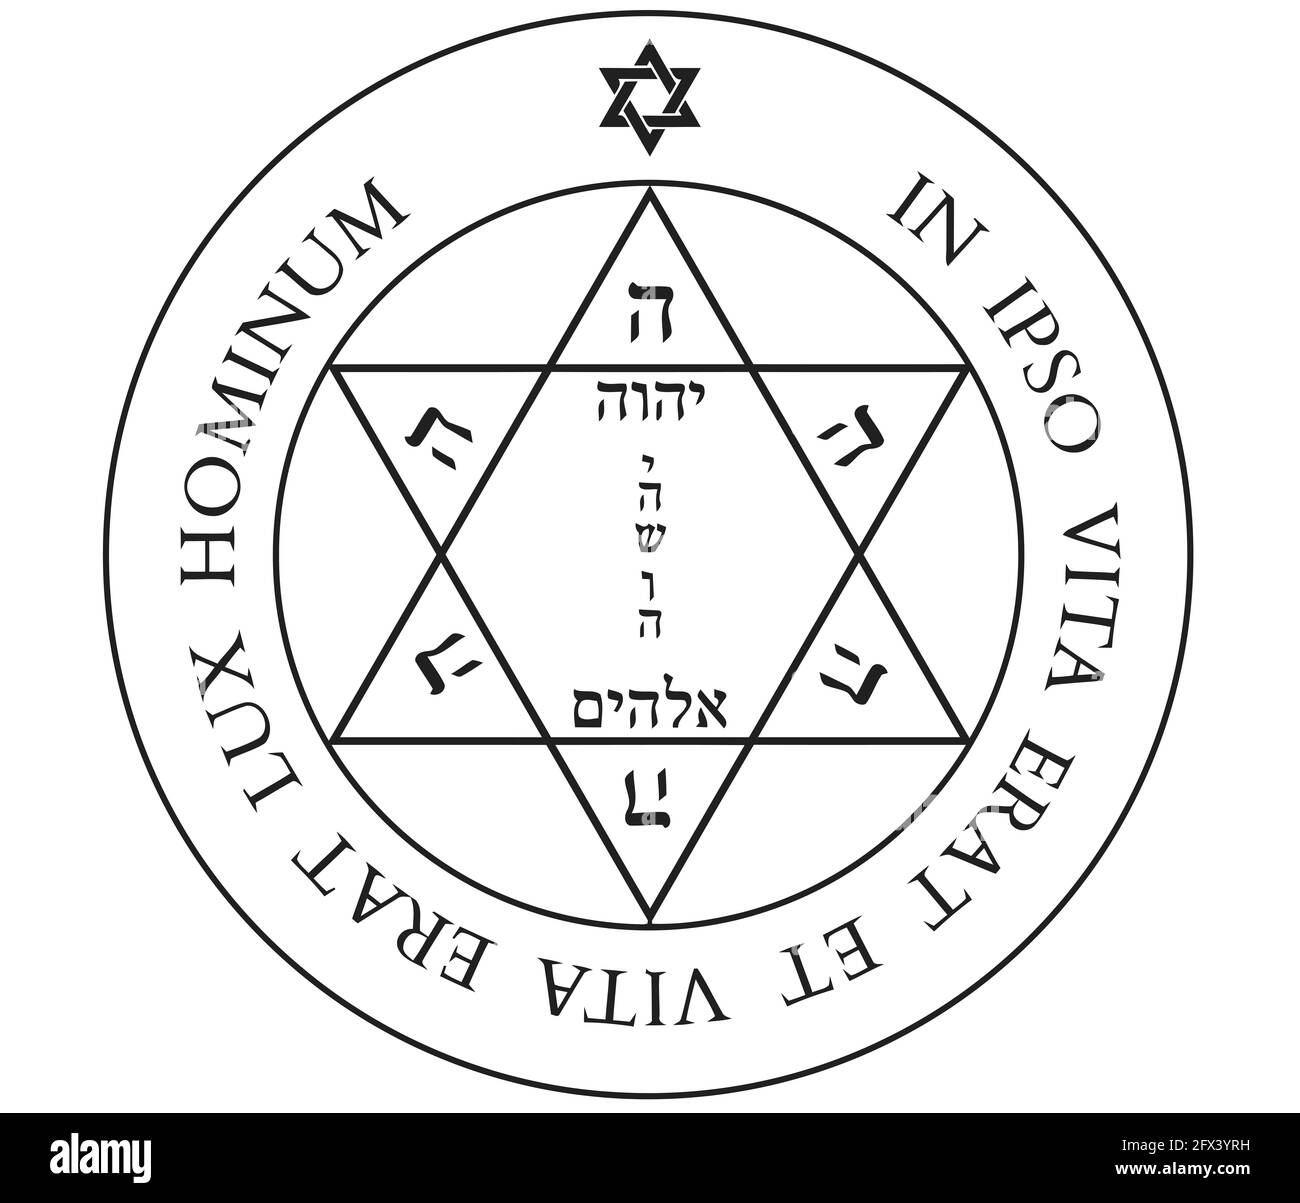 Kabbalah mystical numerology geometric illustration Stock Photo